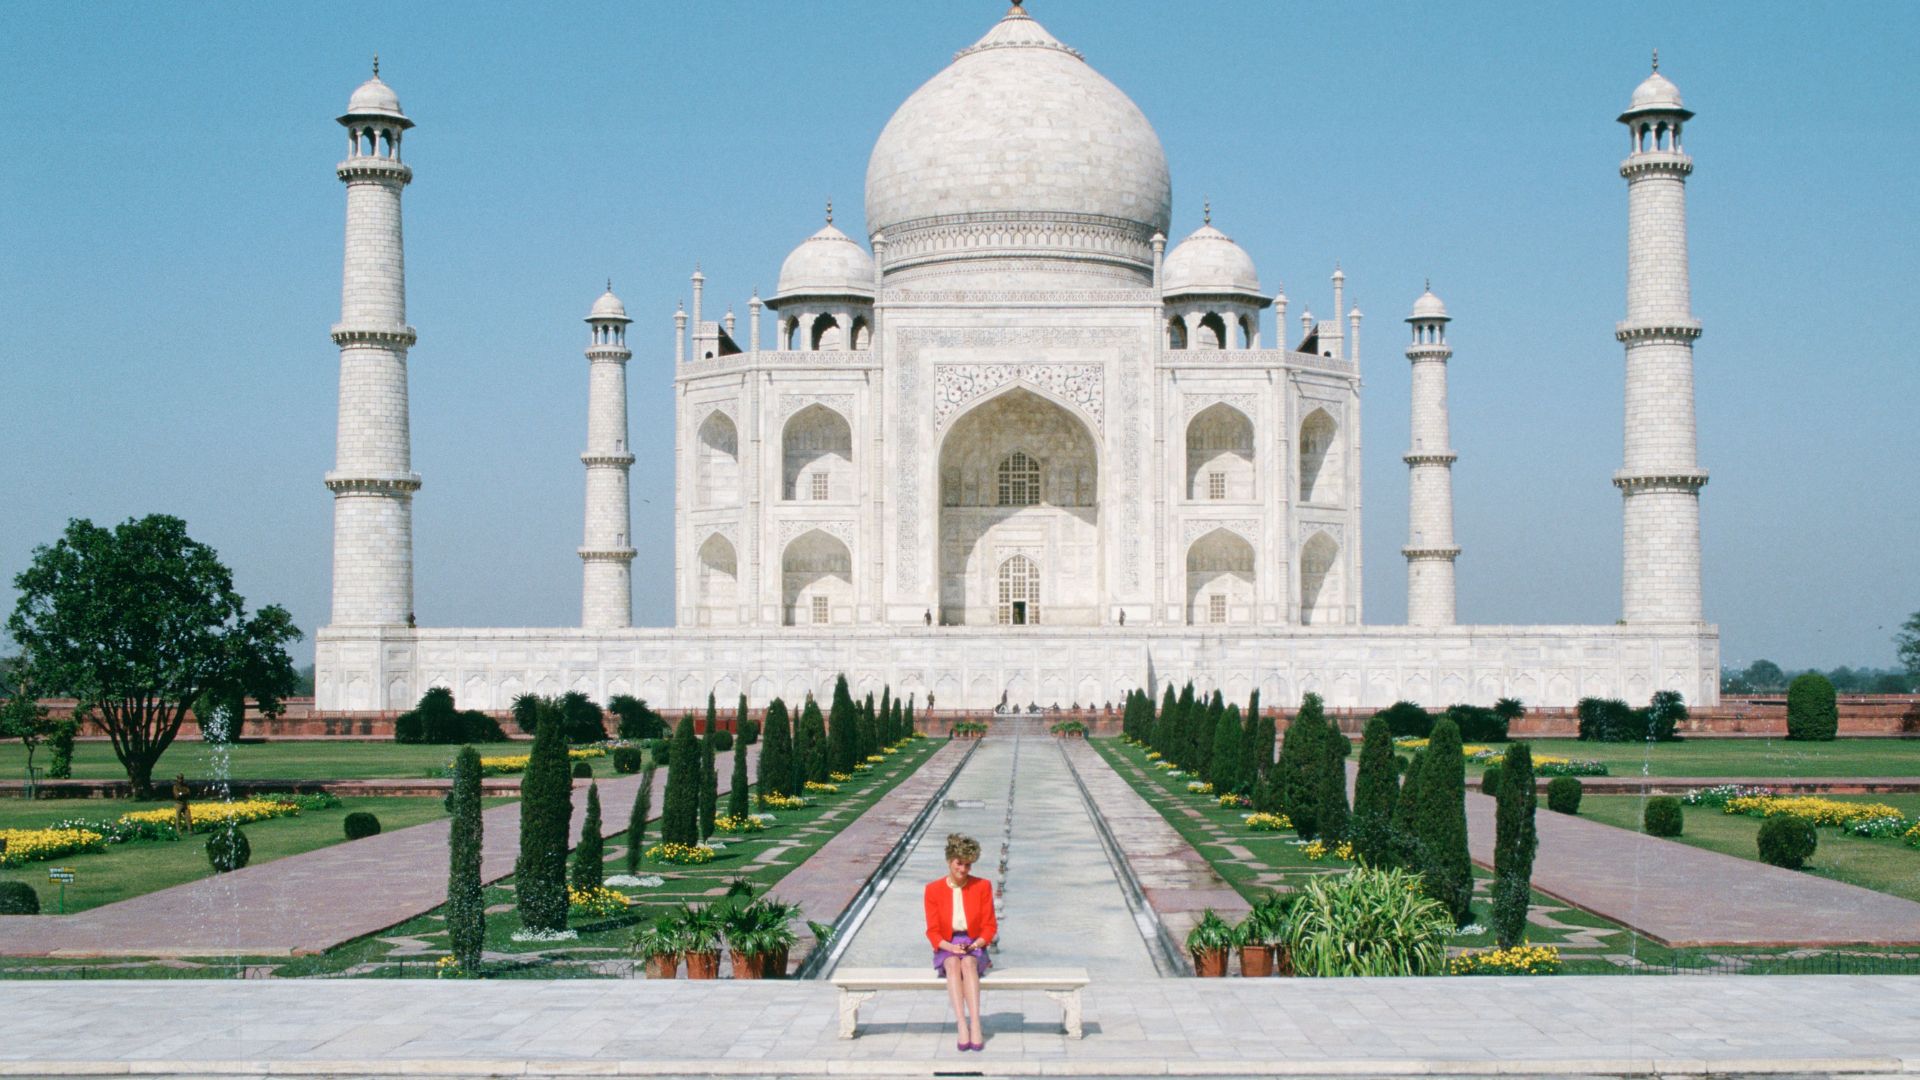 Princess Diana sits in front of the Taj Mahal